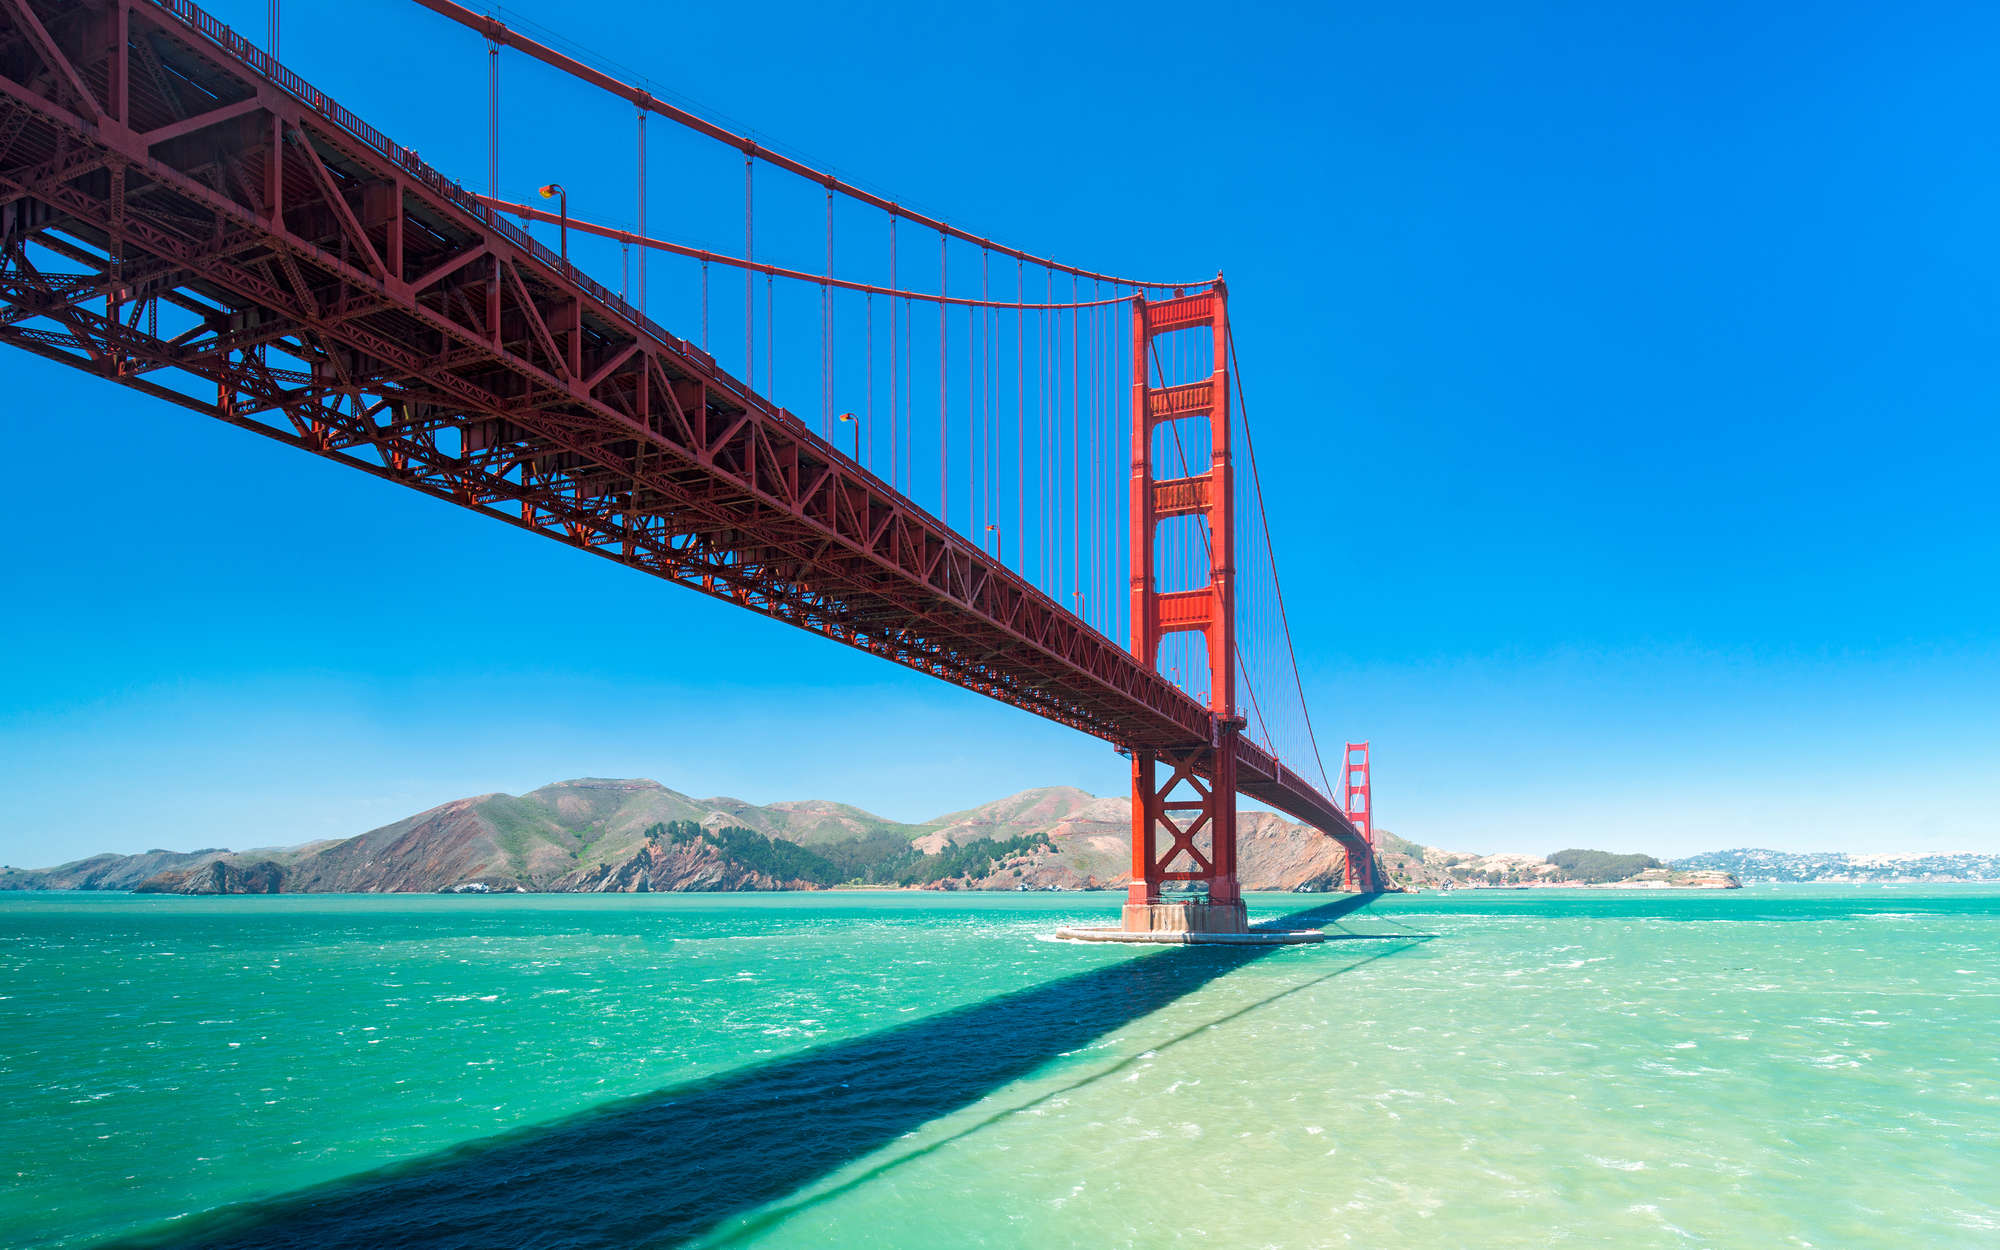             Fototapete Golden Gate Bridge in San Francisco – Perlmutt Glattvlies
        